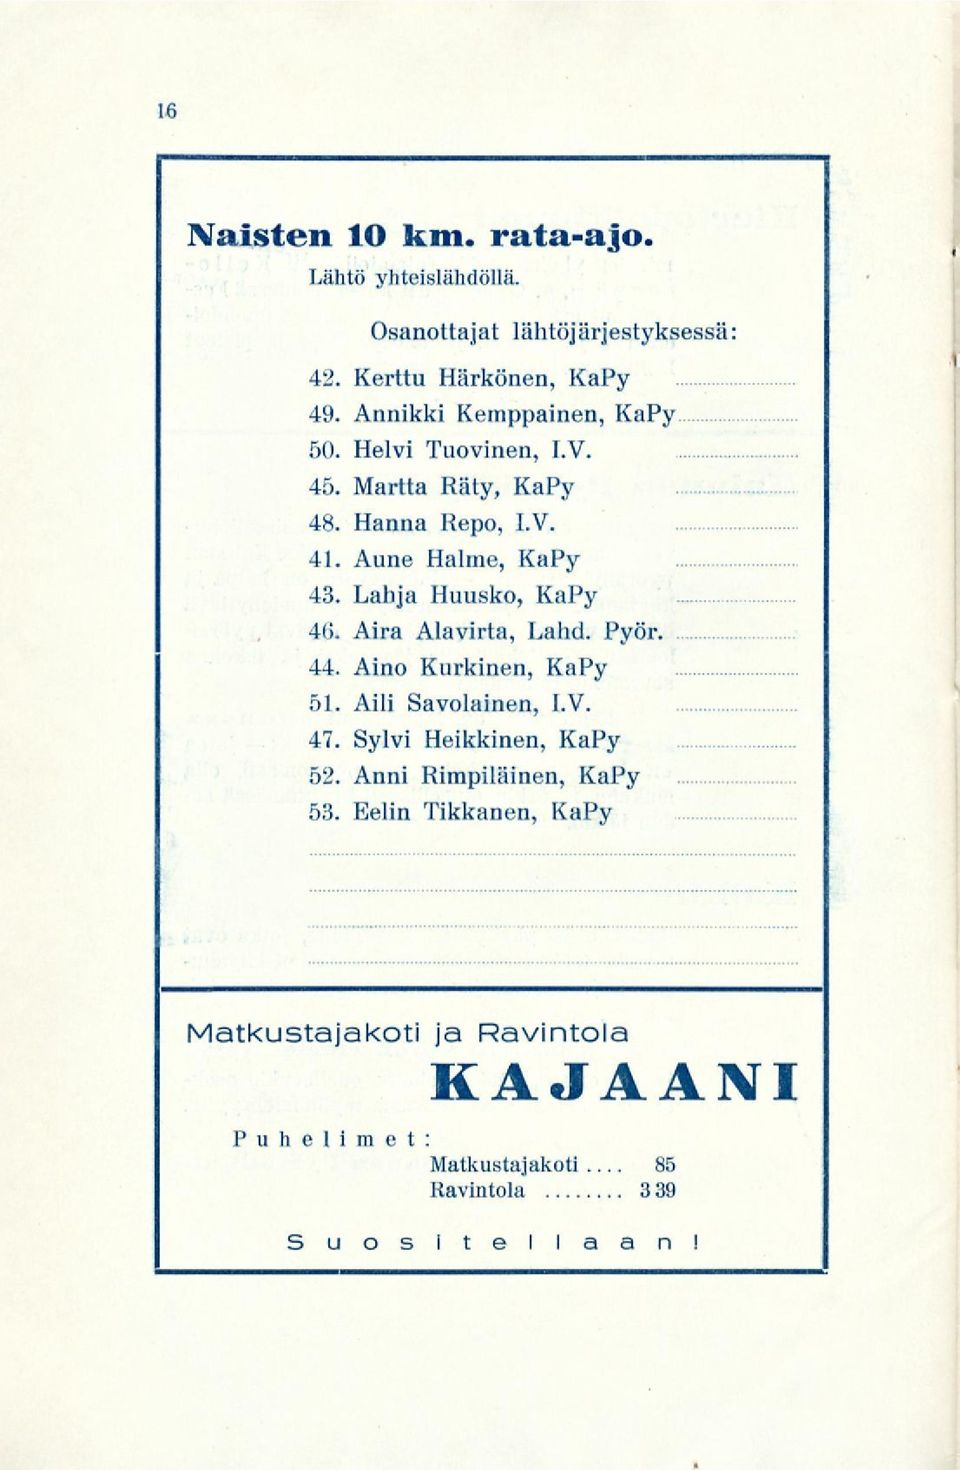 Lahja Huusko, KaPy 4(>. Aira Alavirta, Lahd. Pyör. 44. Aino Kurkinen, KaPy 51. Aili Savolainen, I.V. 47.